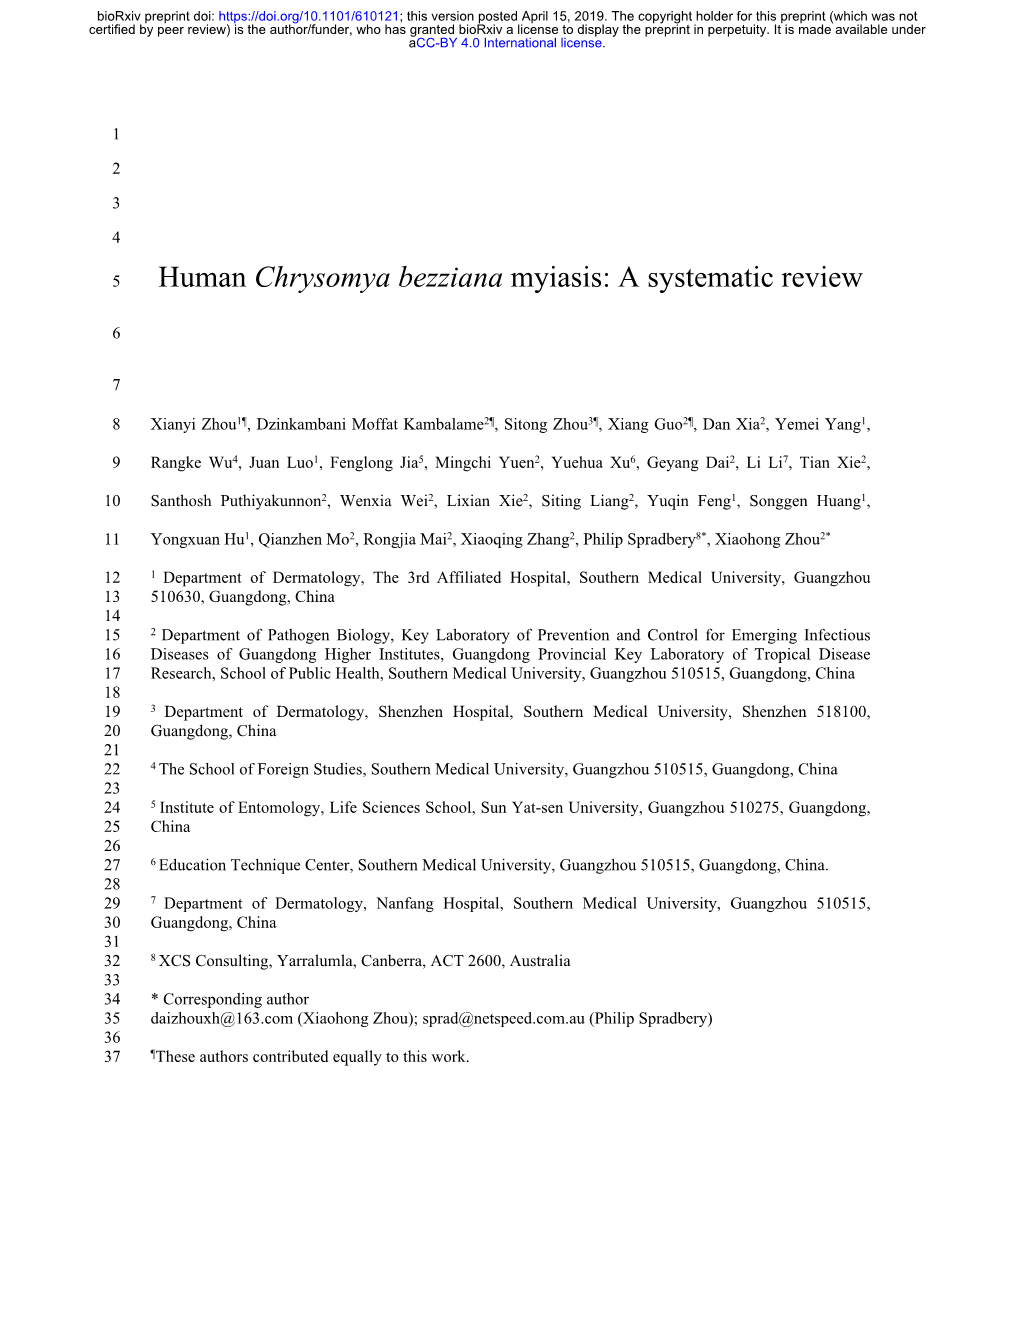 Human Chrysomya Bezziana Myiasis: a Systematic Review